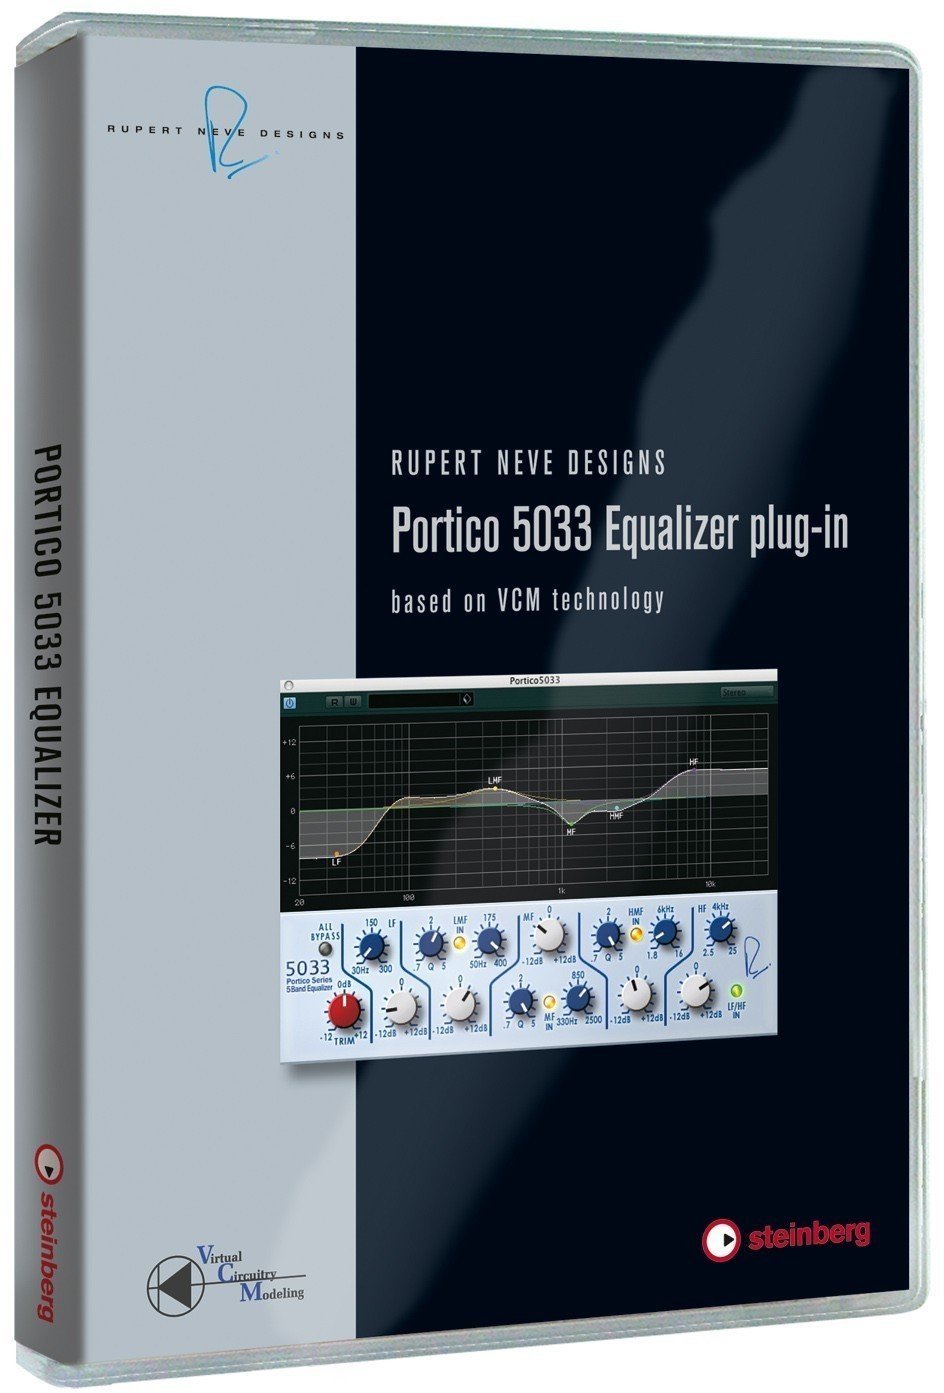 VST Instrument studio-software Steinberg RND Portico 5033 EQ